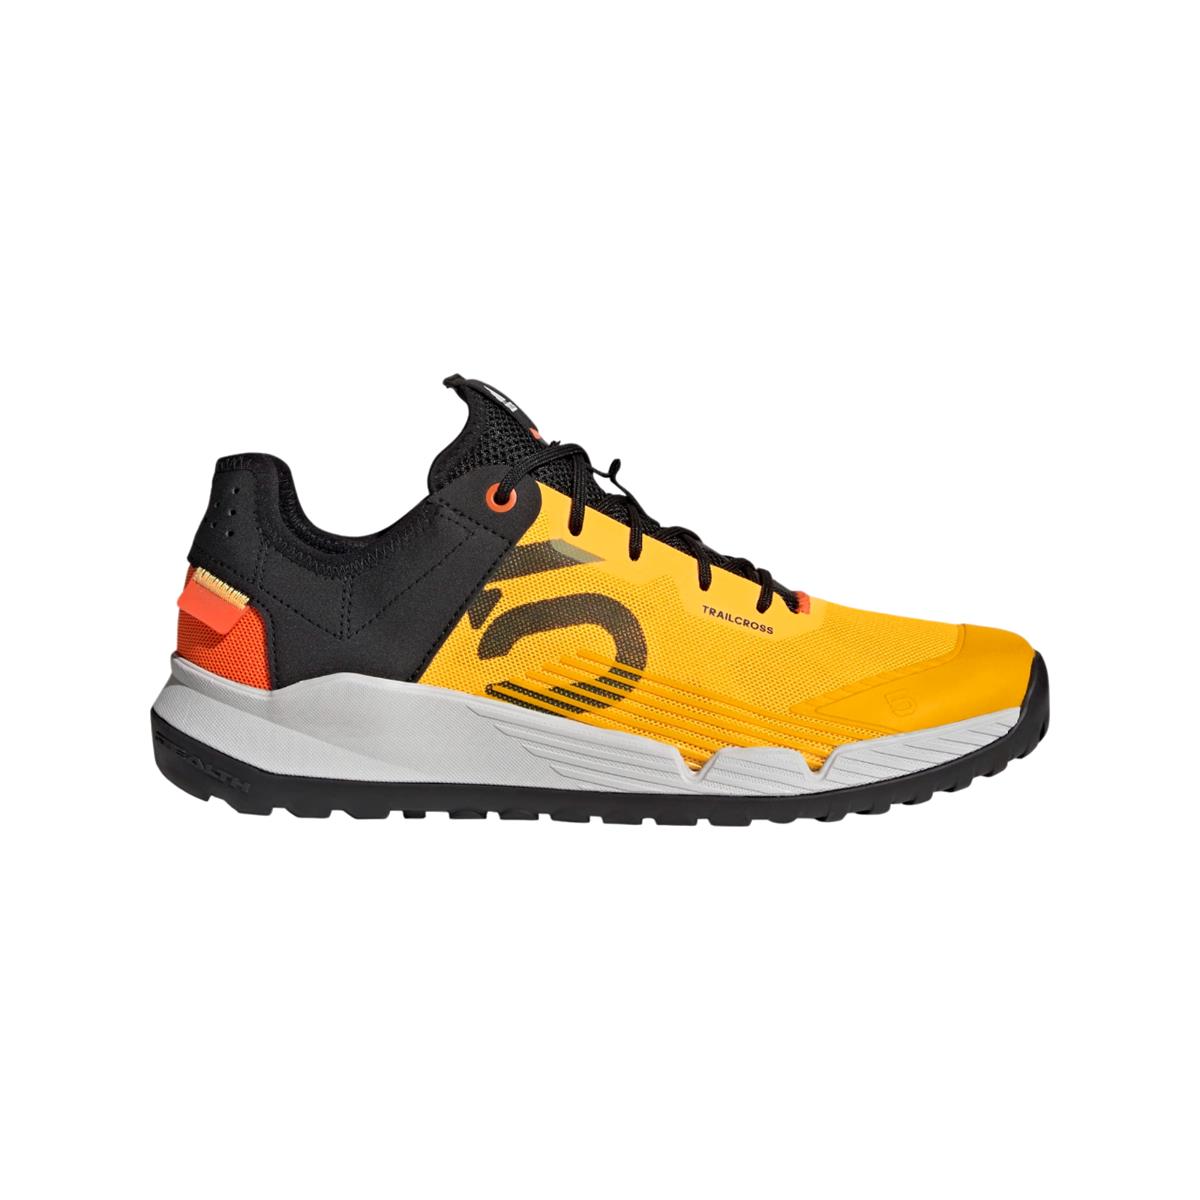 Flat MTB Shoes 5.10 Trailcross LT Black/Orange Size 40